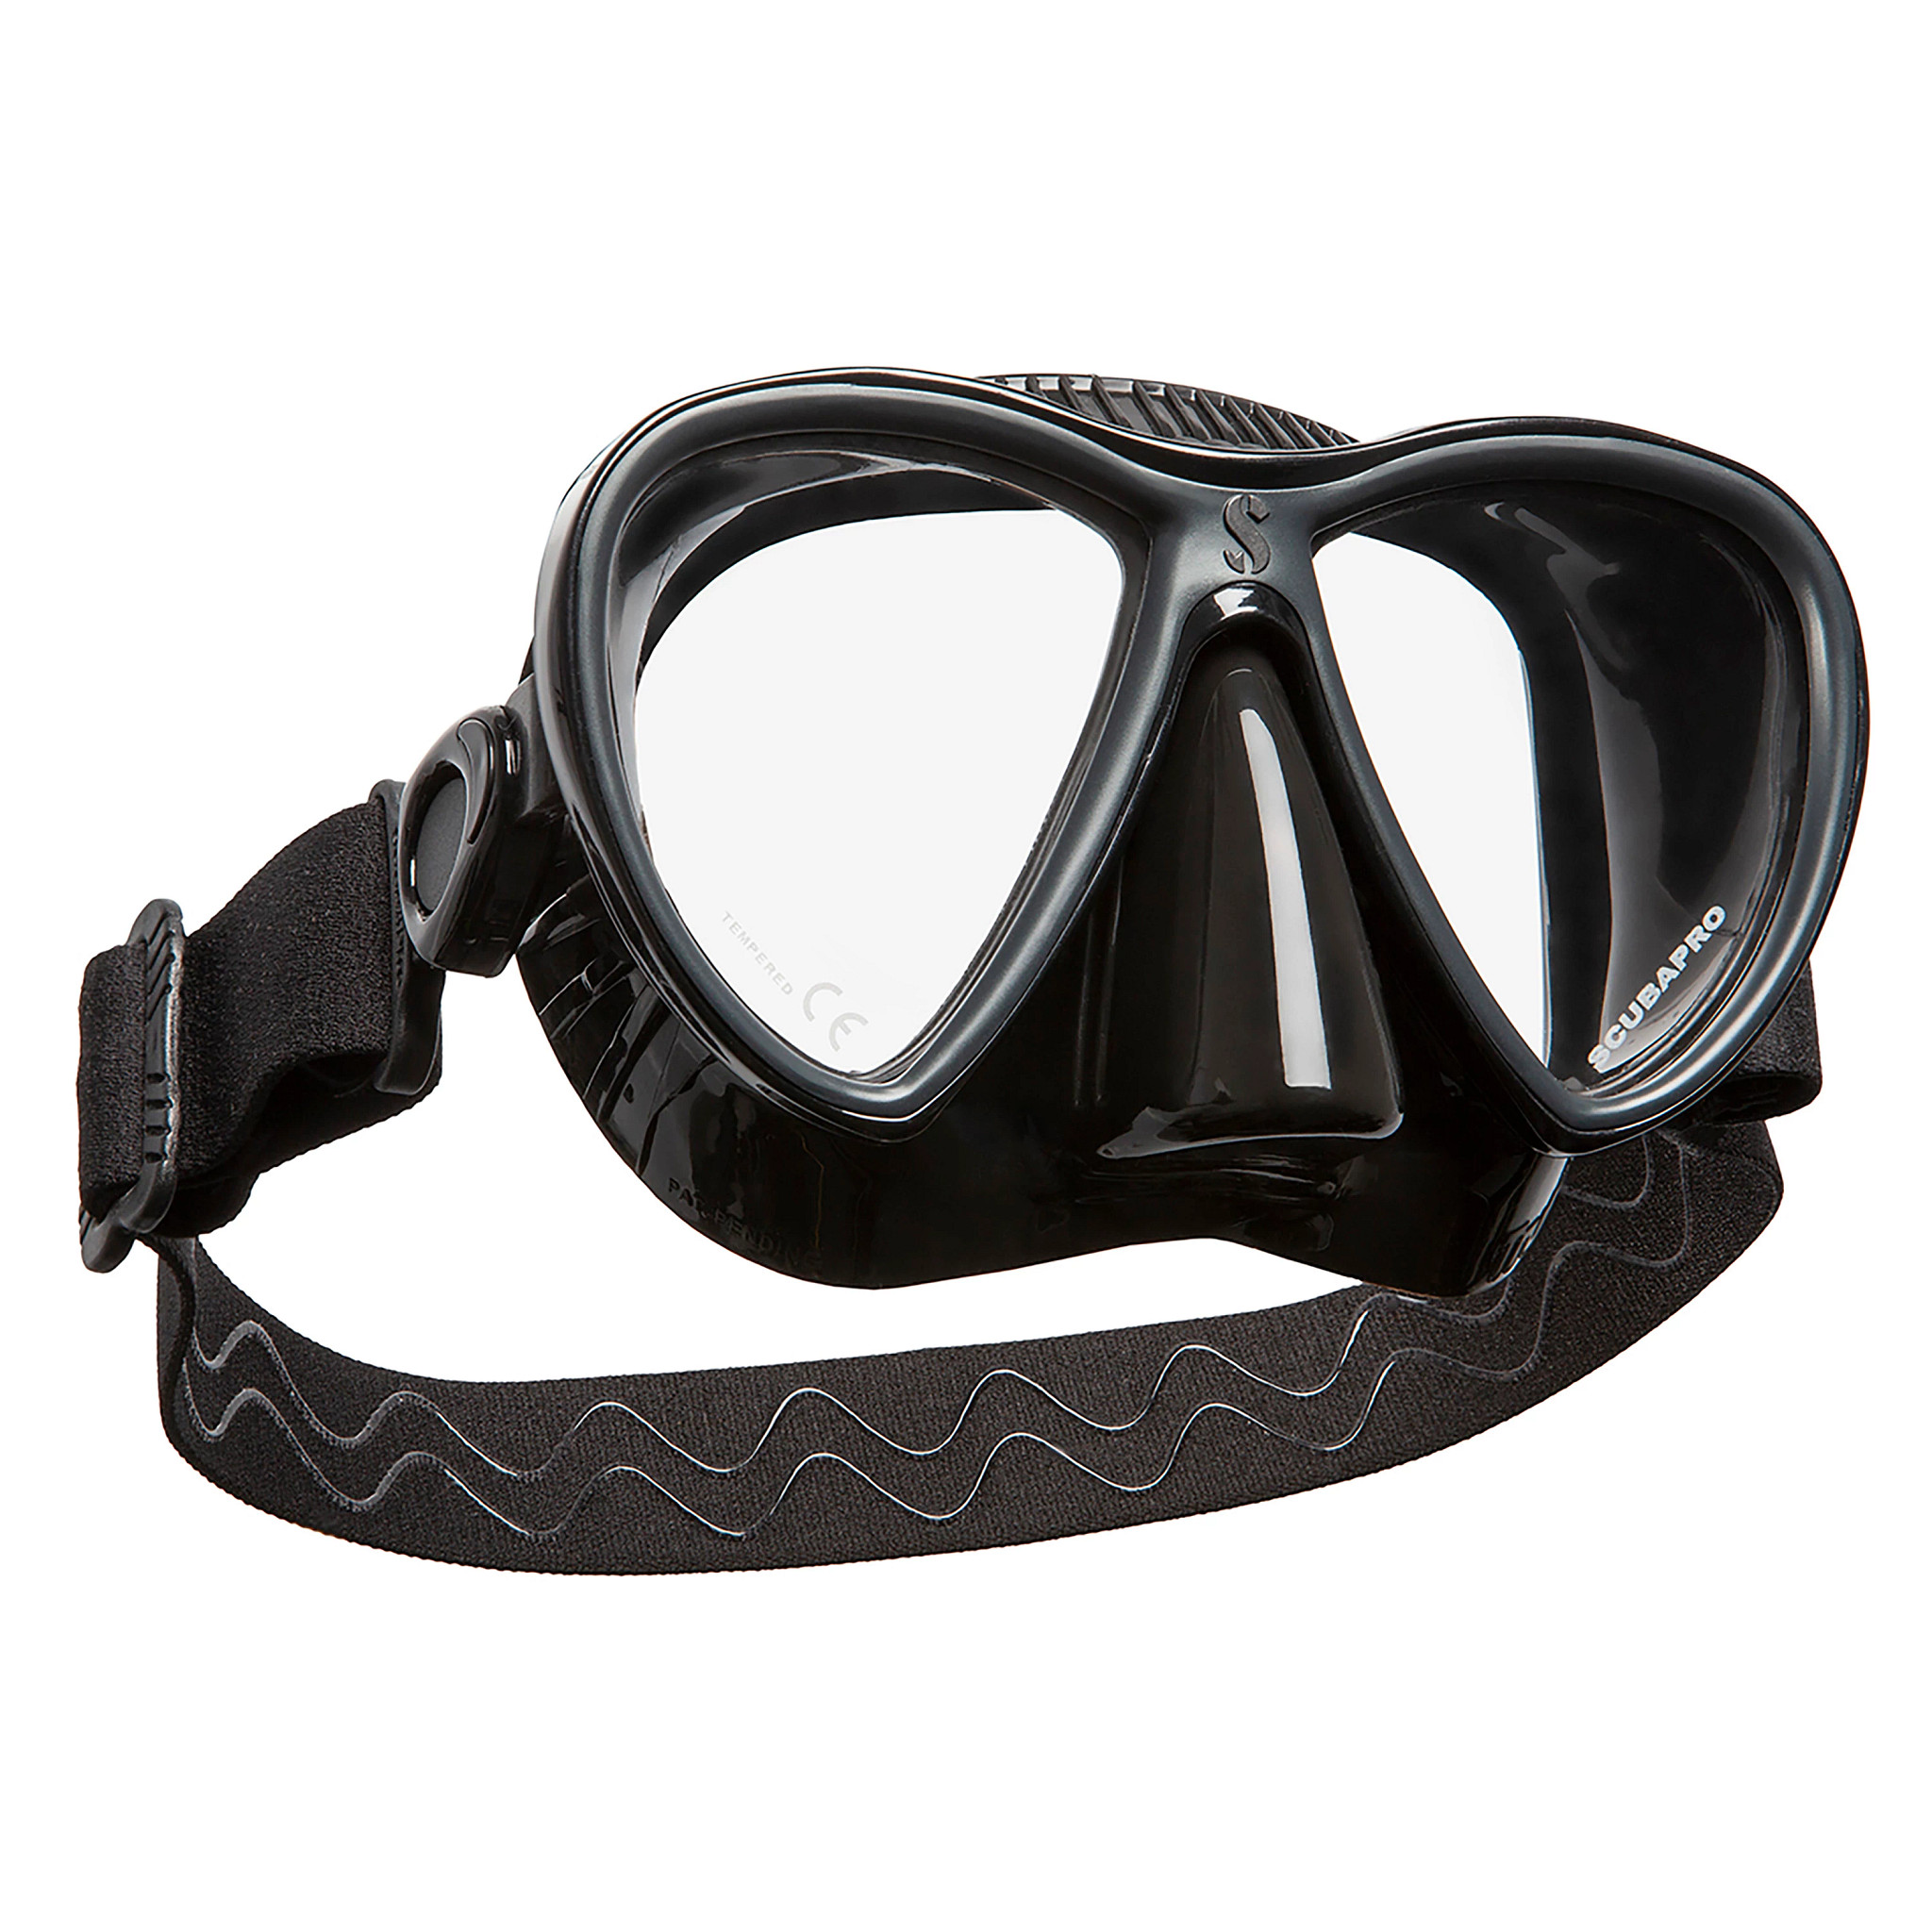 Scuba & Snorkeling Masks - SCUBAPRO